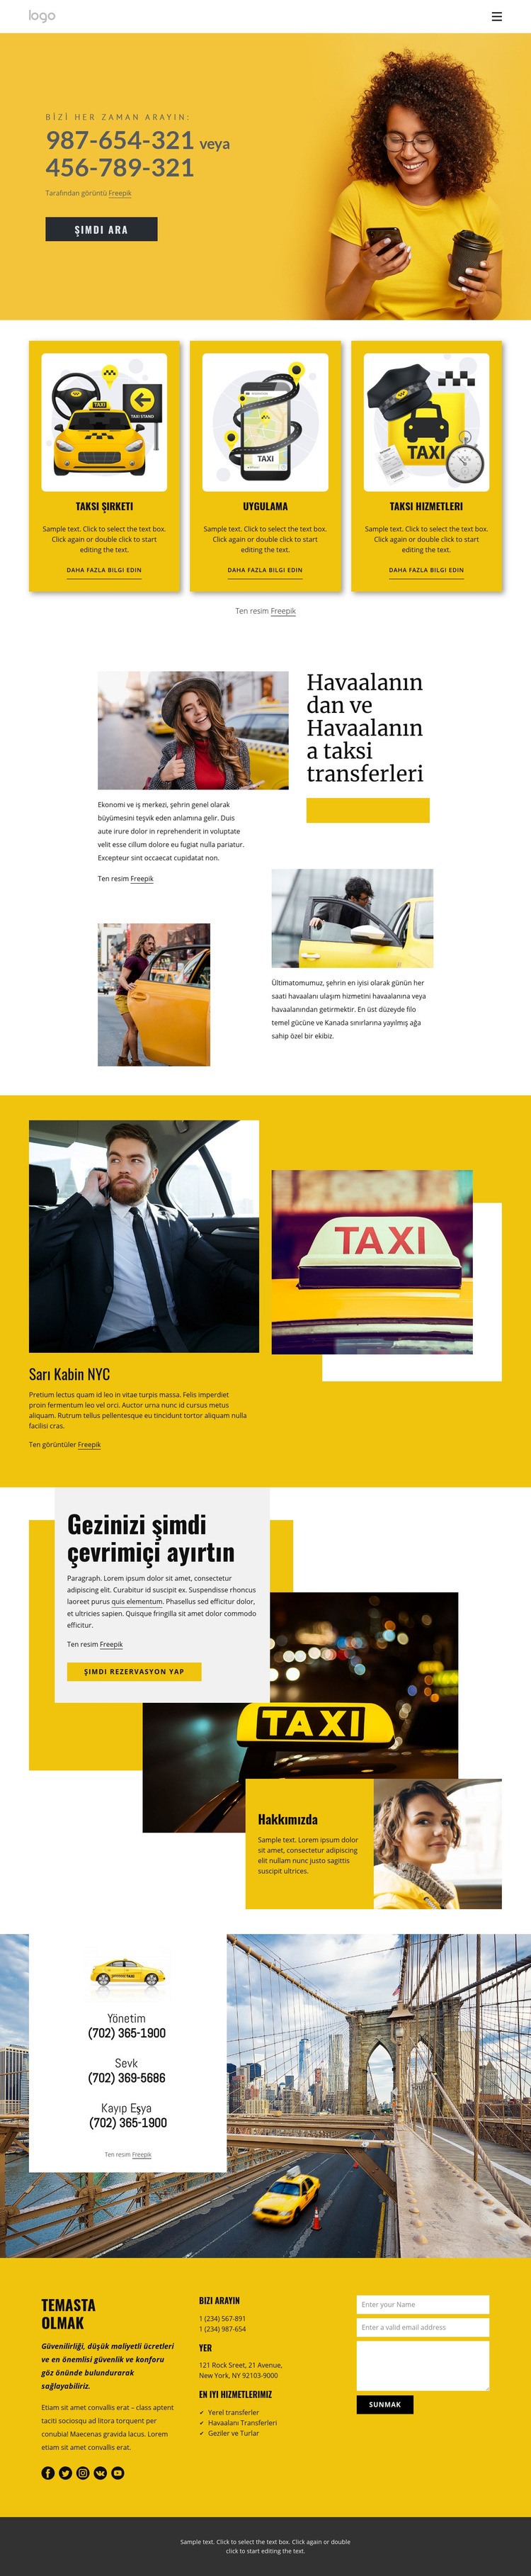 Kaliteli taksi hizmeti Şablon